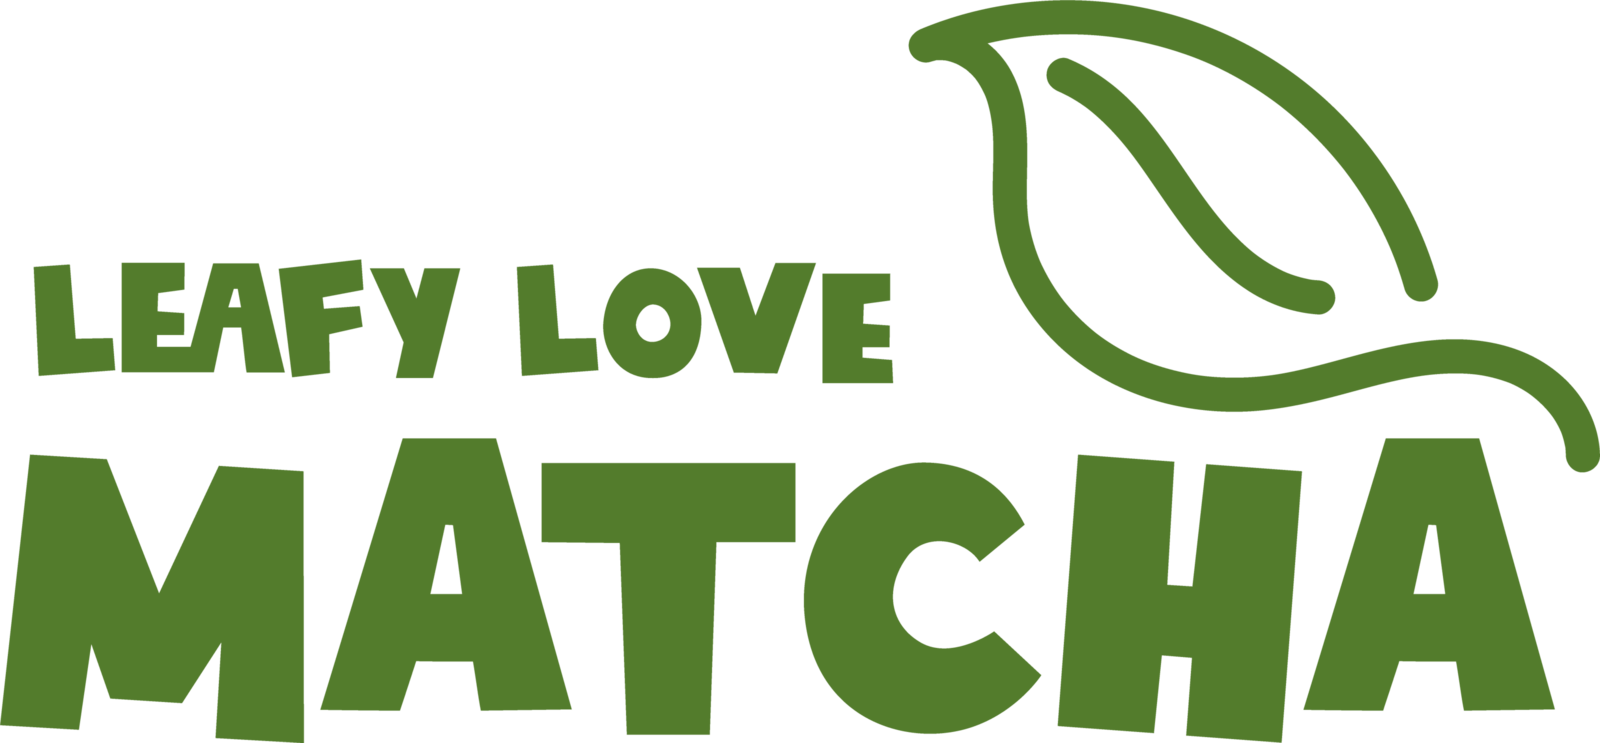 leafy matcha logo design